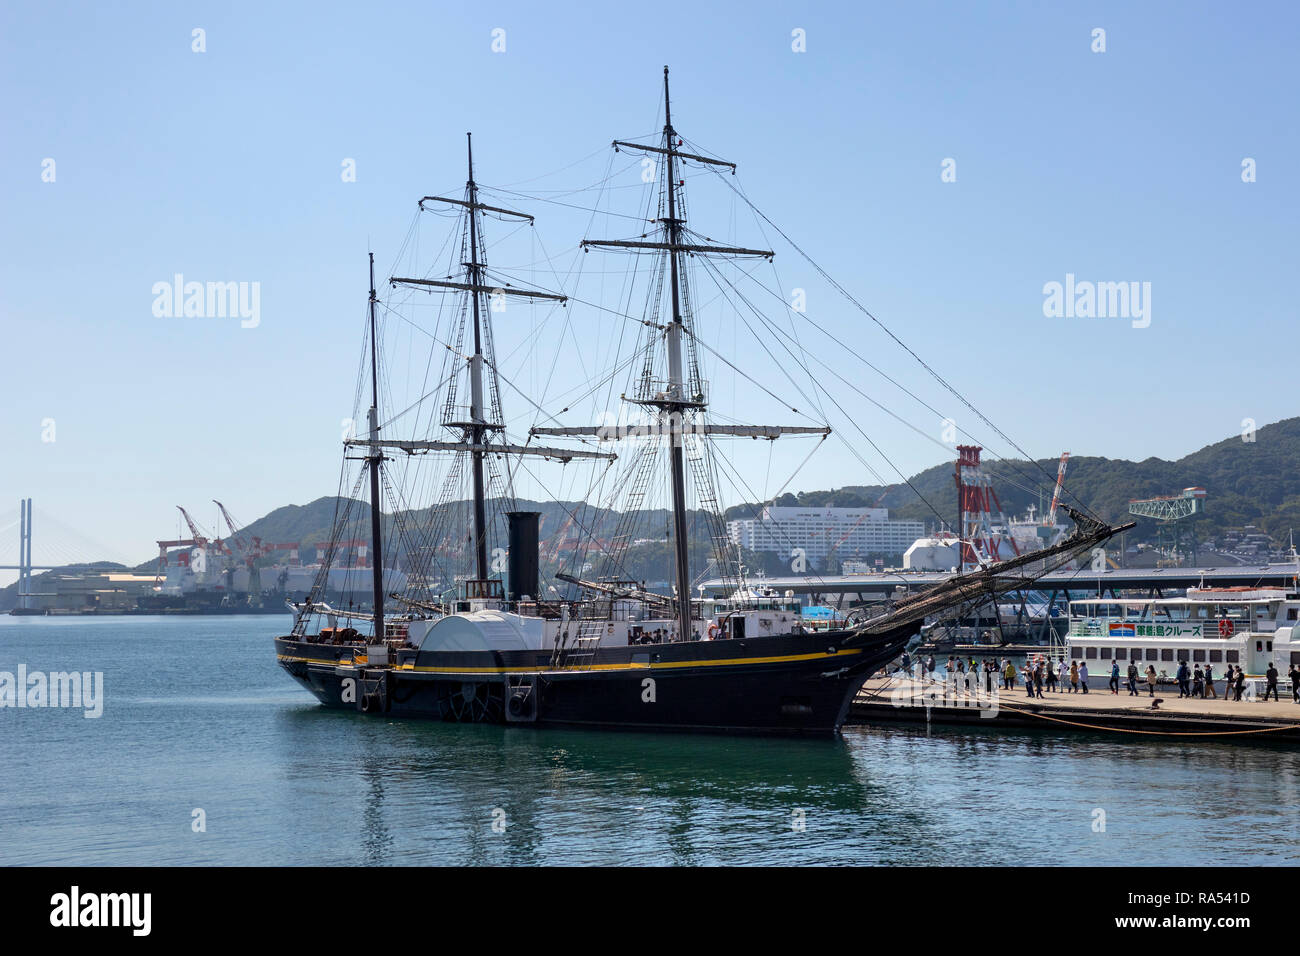 Nagasaki, Japan - October 25, 2018: Historical sailing boat in the Nagasaki harbor, Japan Stock Photo